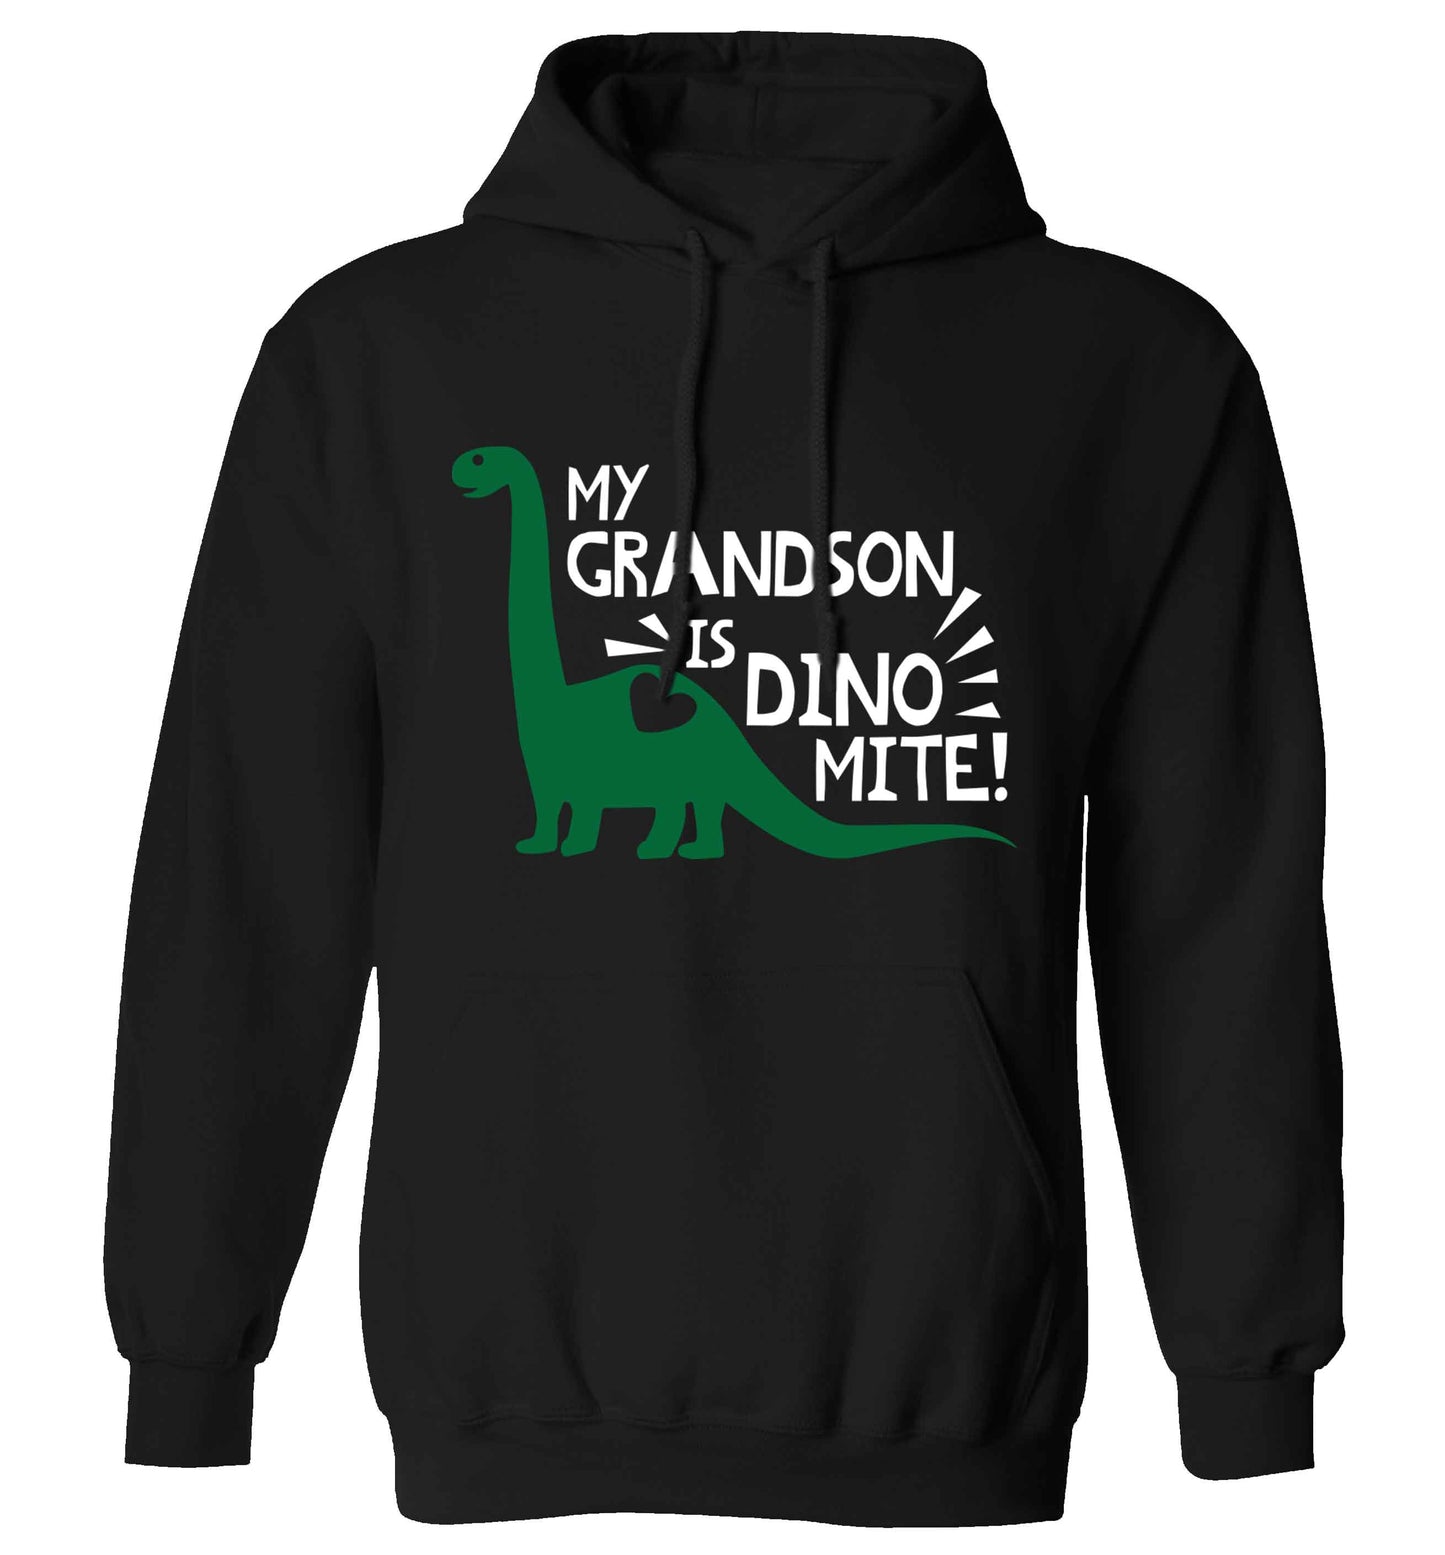 My grandson is dinomite! adults unisex black hoodie 2XL